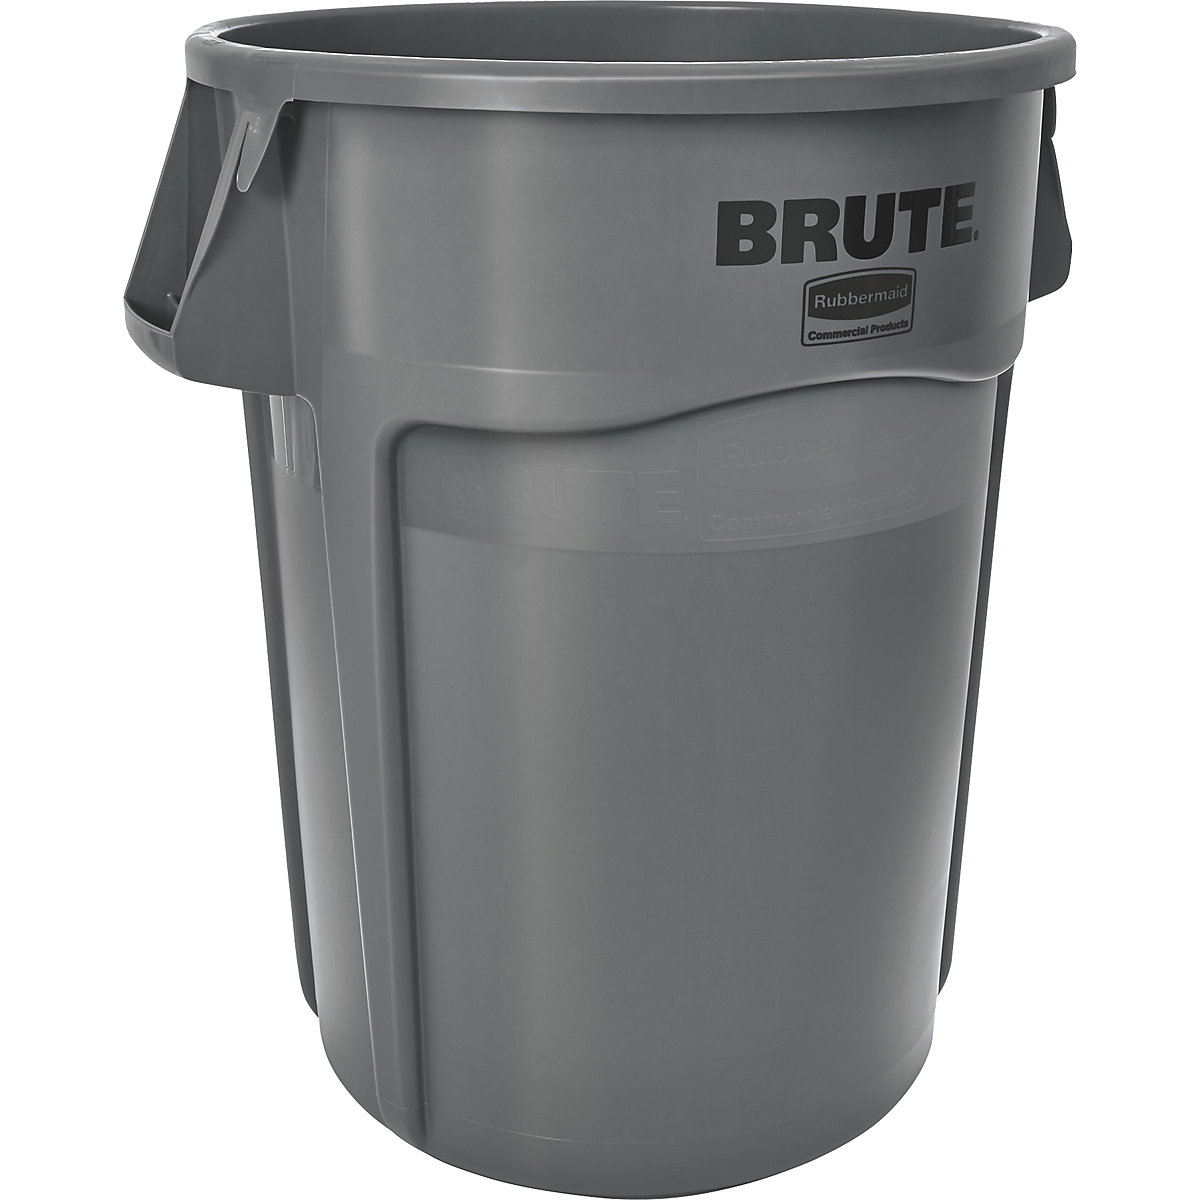 Univerzalni kontejner BRUTE®, okrugli – Rubbermaid, sadržaj 166 l, u sivoj boji-12